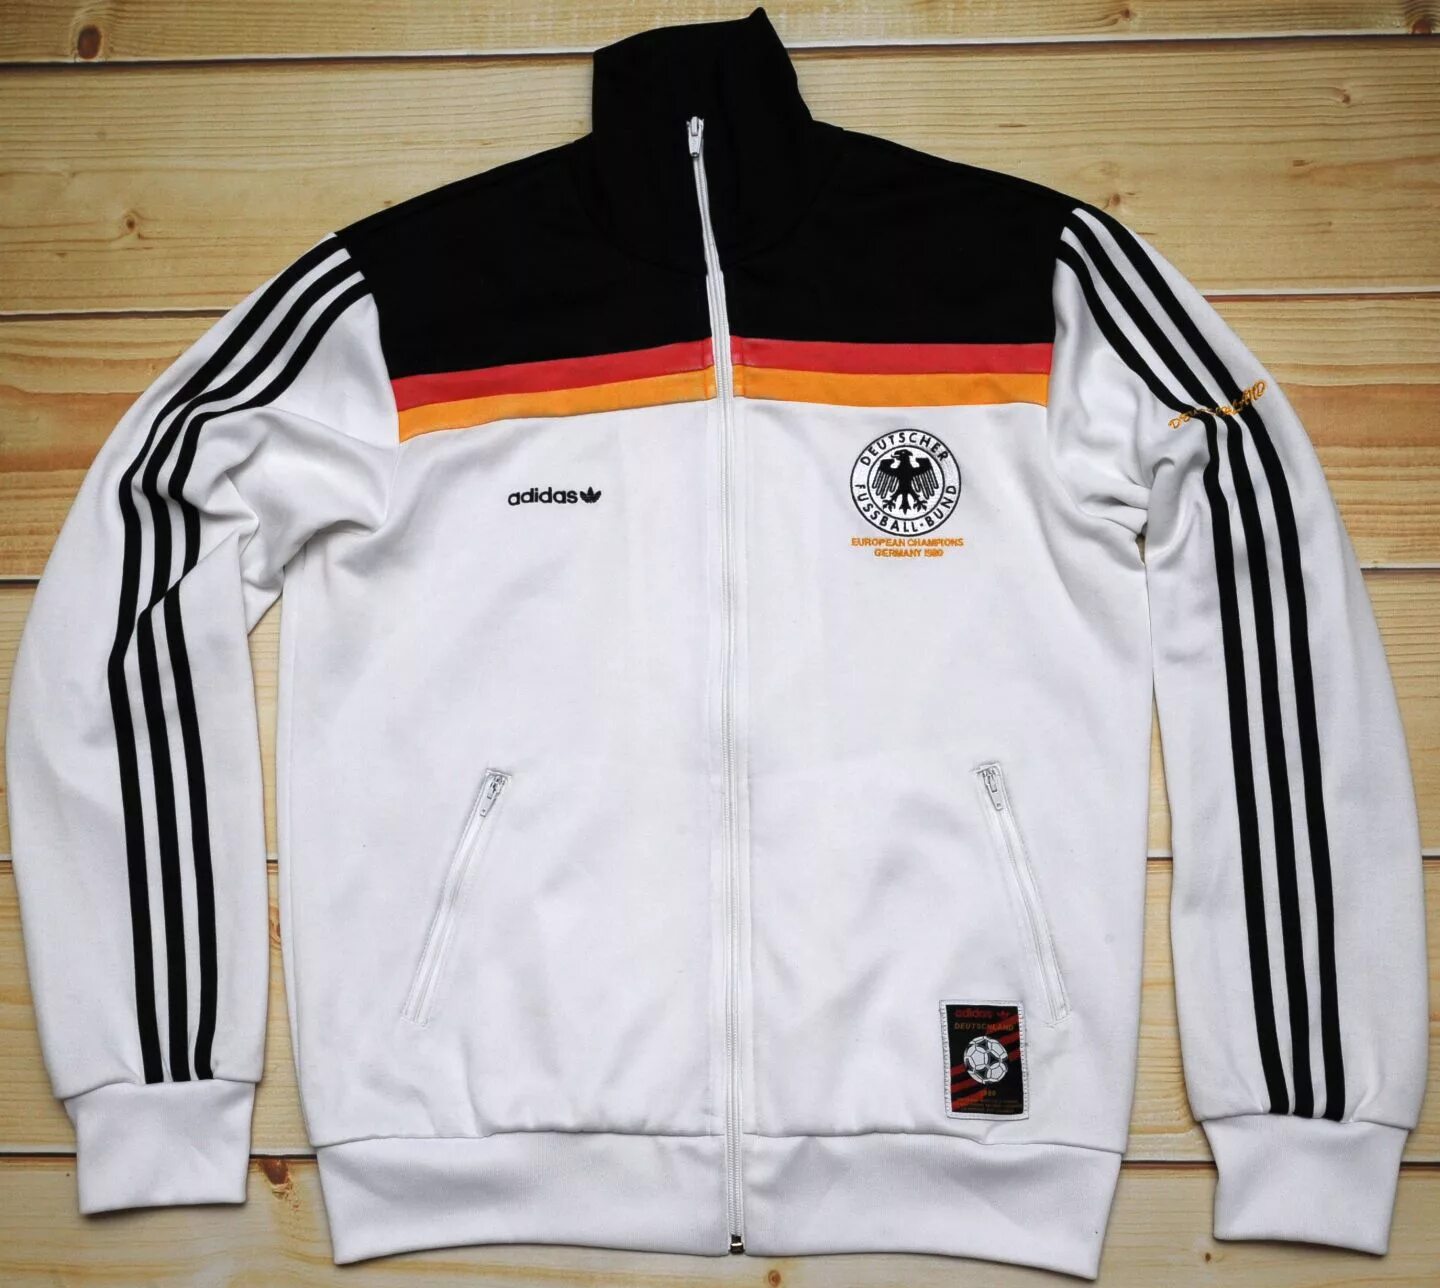 Олимпийка адидас deutscher Fussball Bund. Adidas DFB 1980 олимпийка. Олимпийка adidas Euro 2006 Germany. Олимпийка адидас Germany.